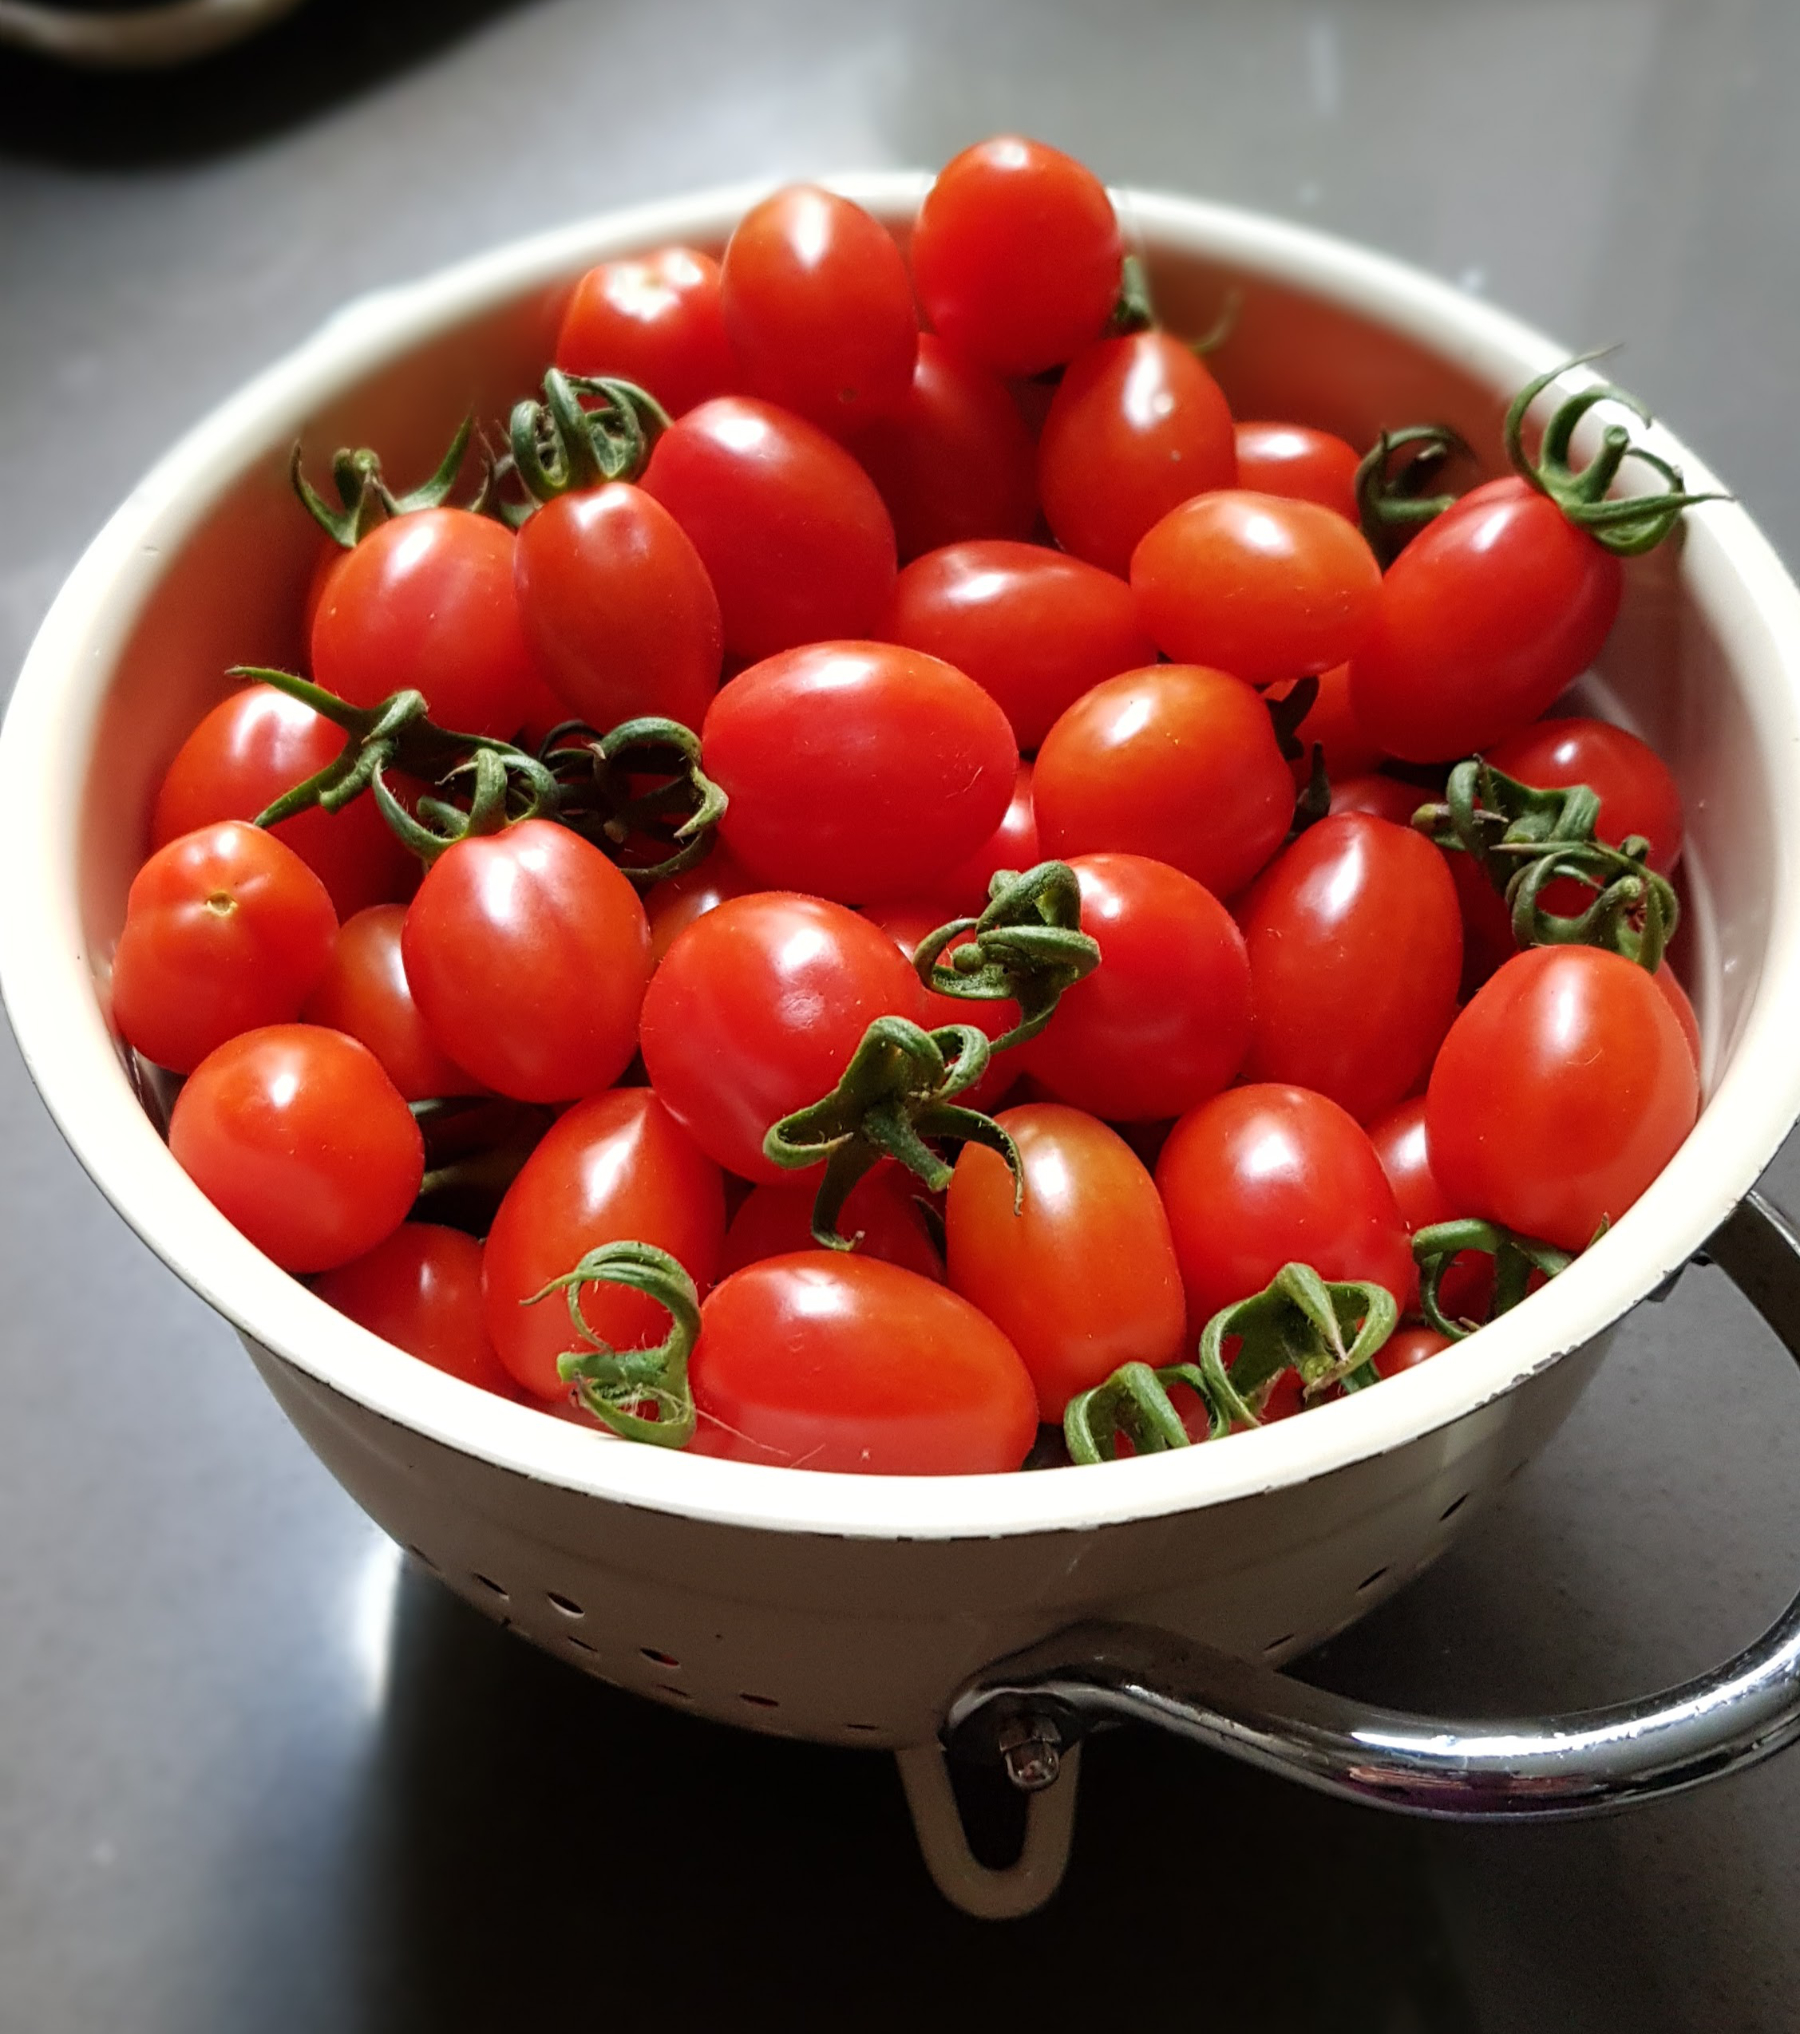 Romello tomatoes